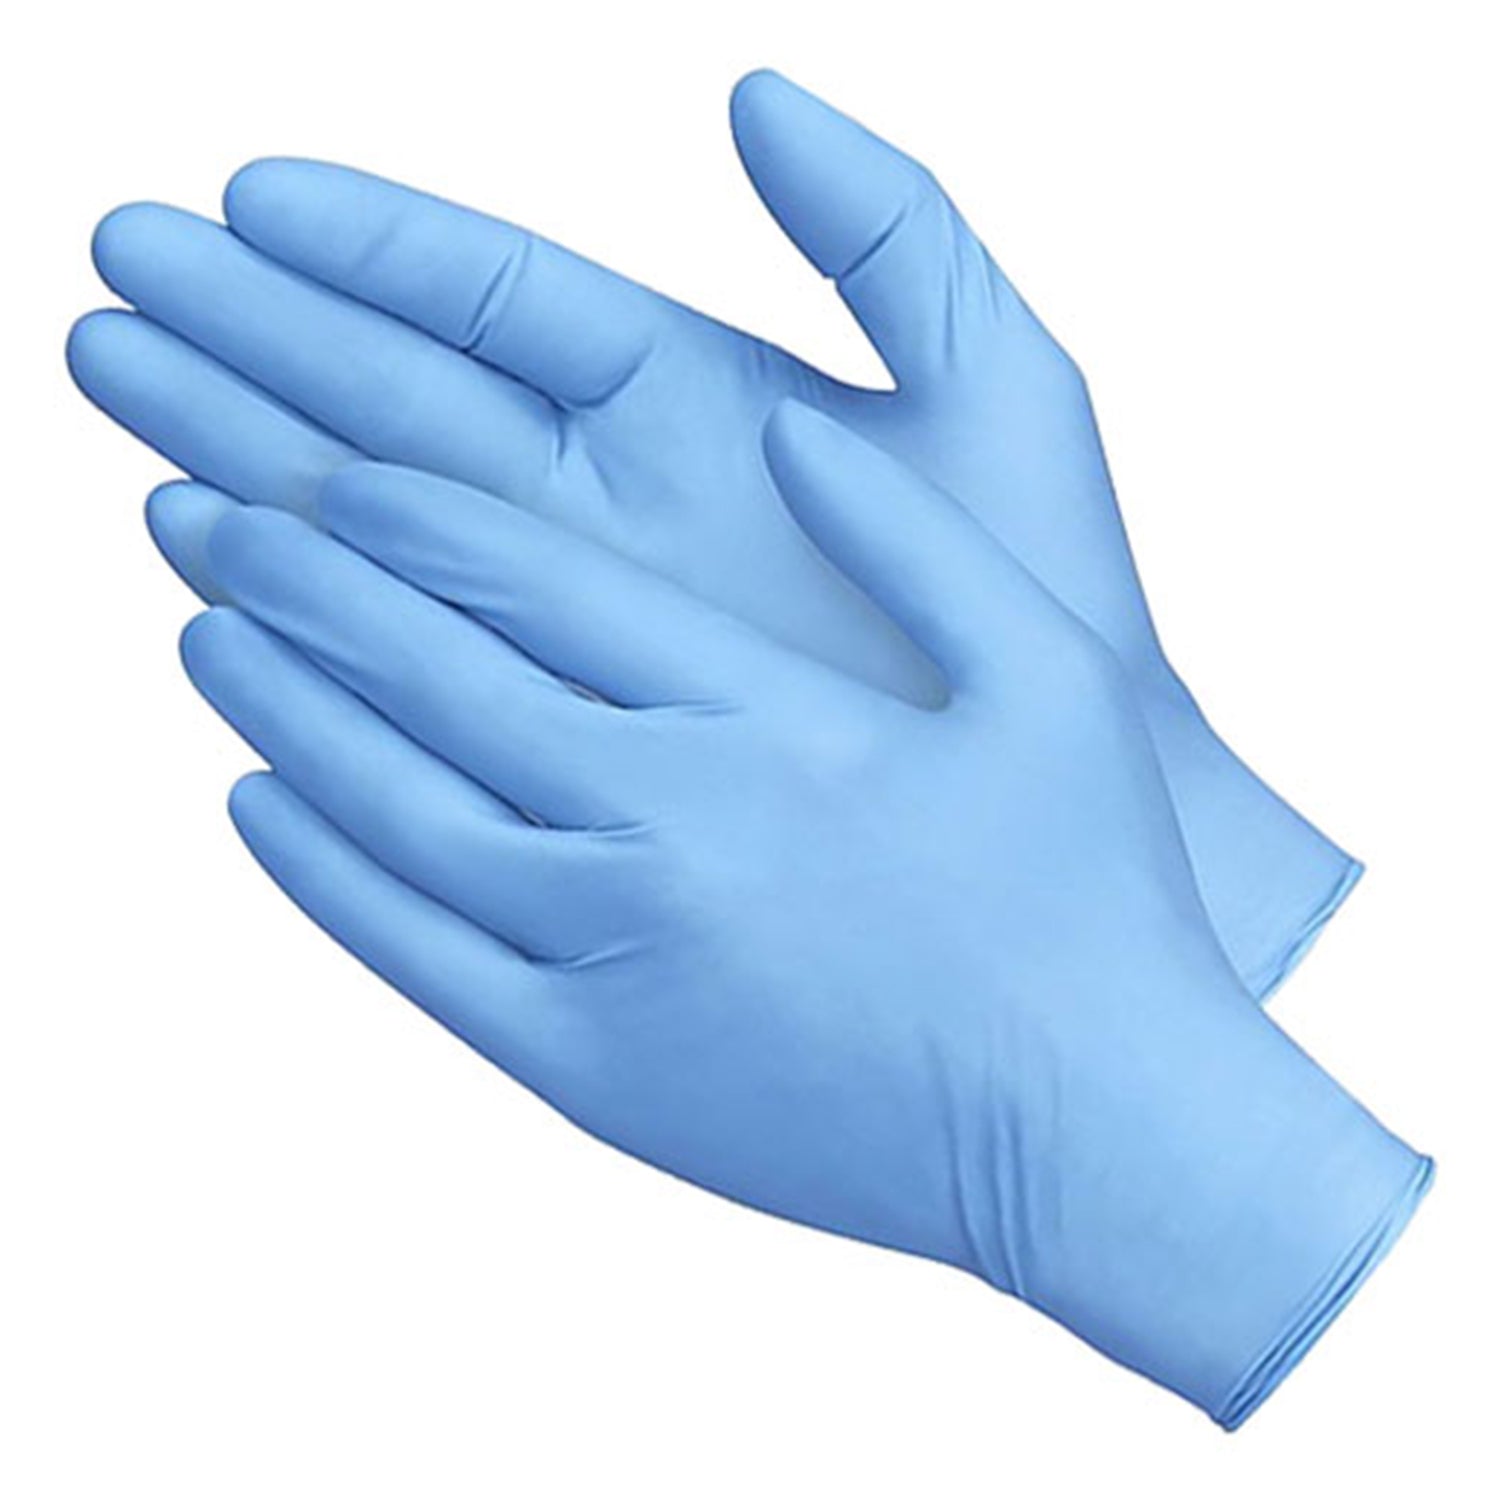 Premier AF Nitrile Examination Gloves | Sterile | Latex Free | Medium | Pack of 50 Pairs (3)